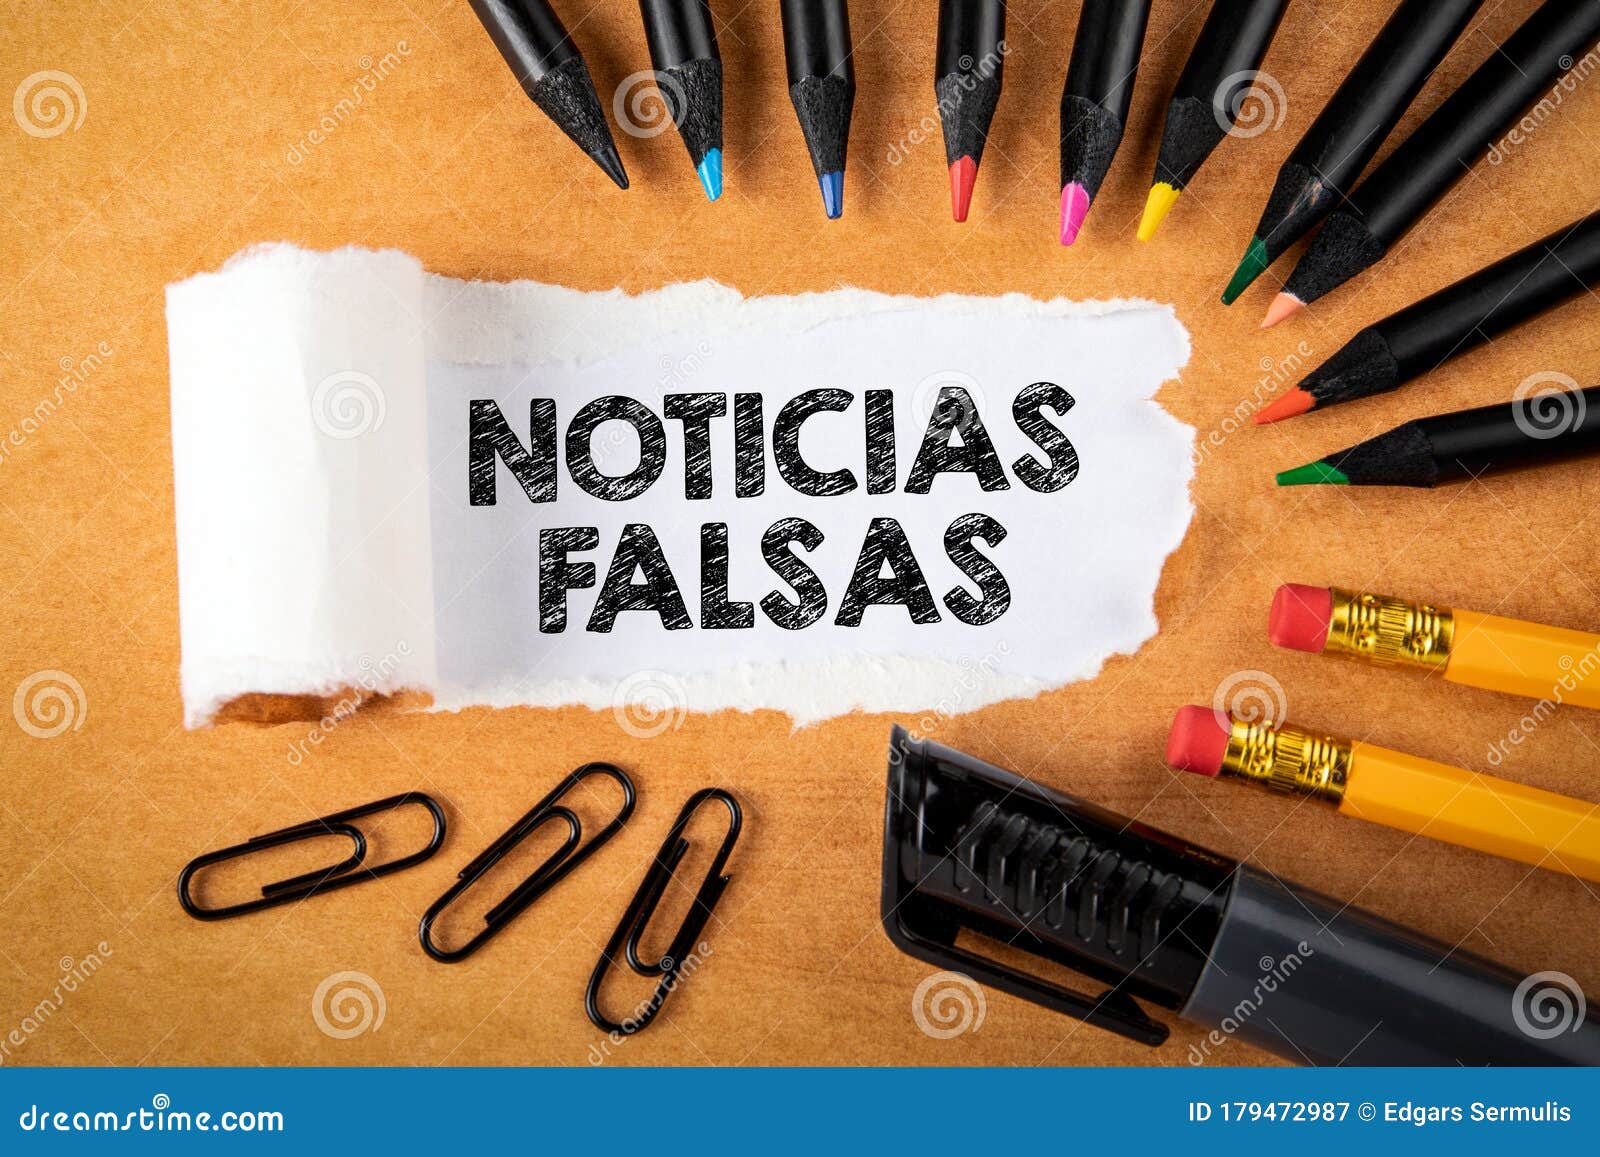 noticias falsas means fake news in spanish. panic, money fraud and politics concept